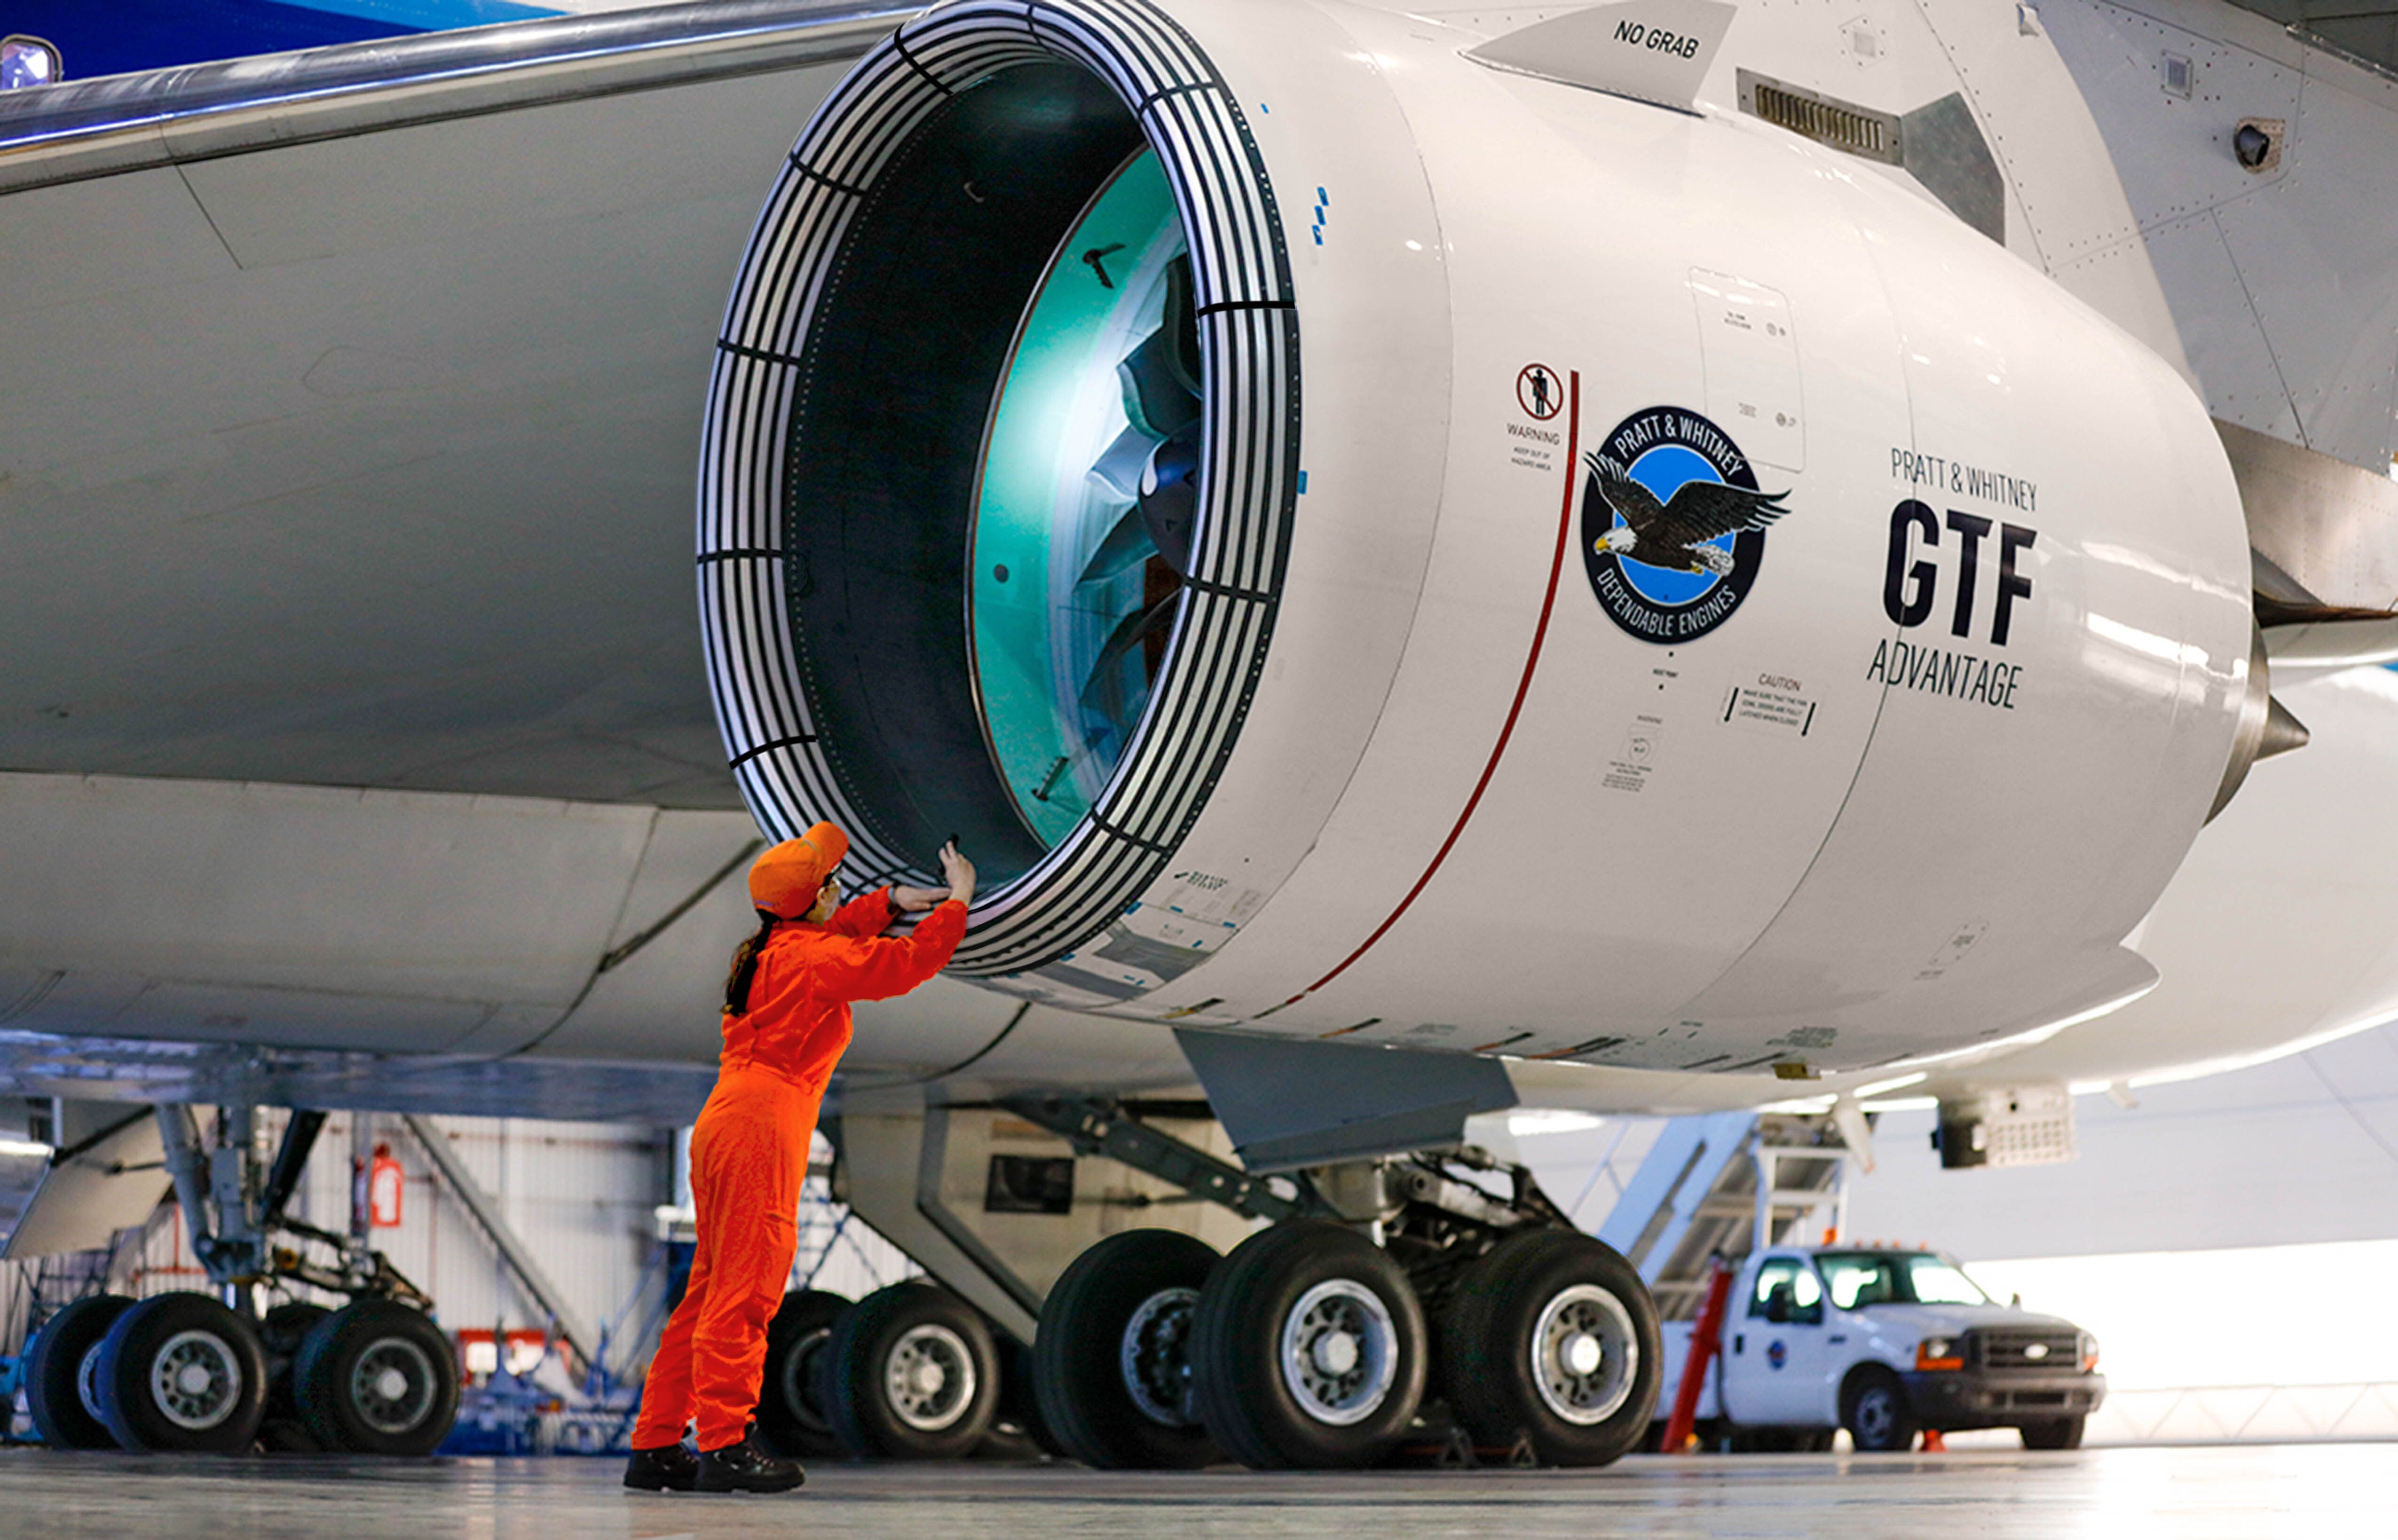 A Pratt & Whitney GTF Advantage engine being checked in an aircraft hangar.